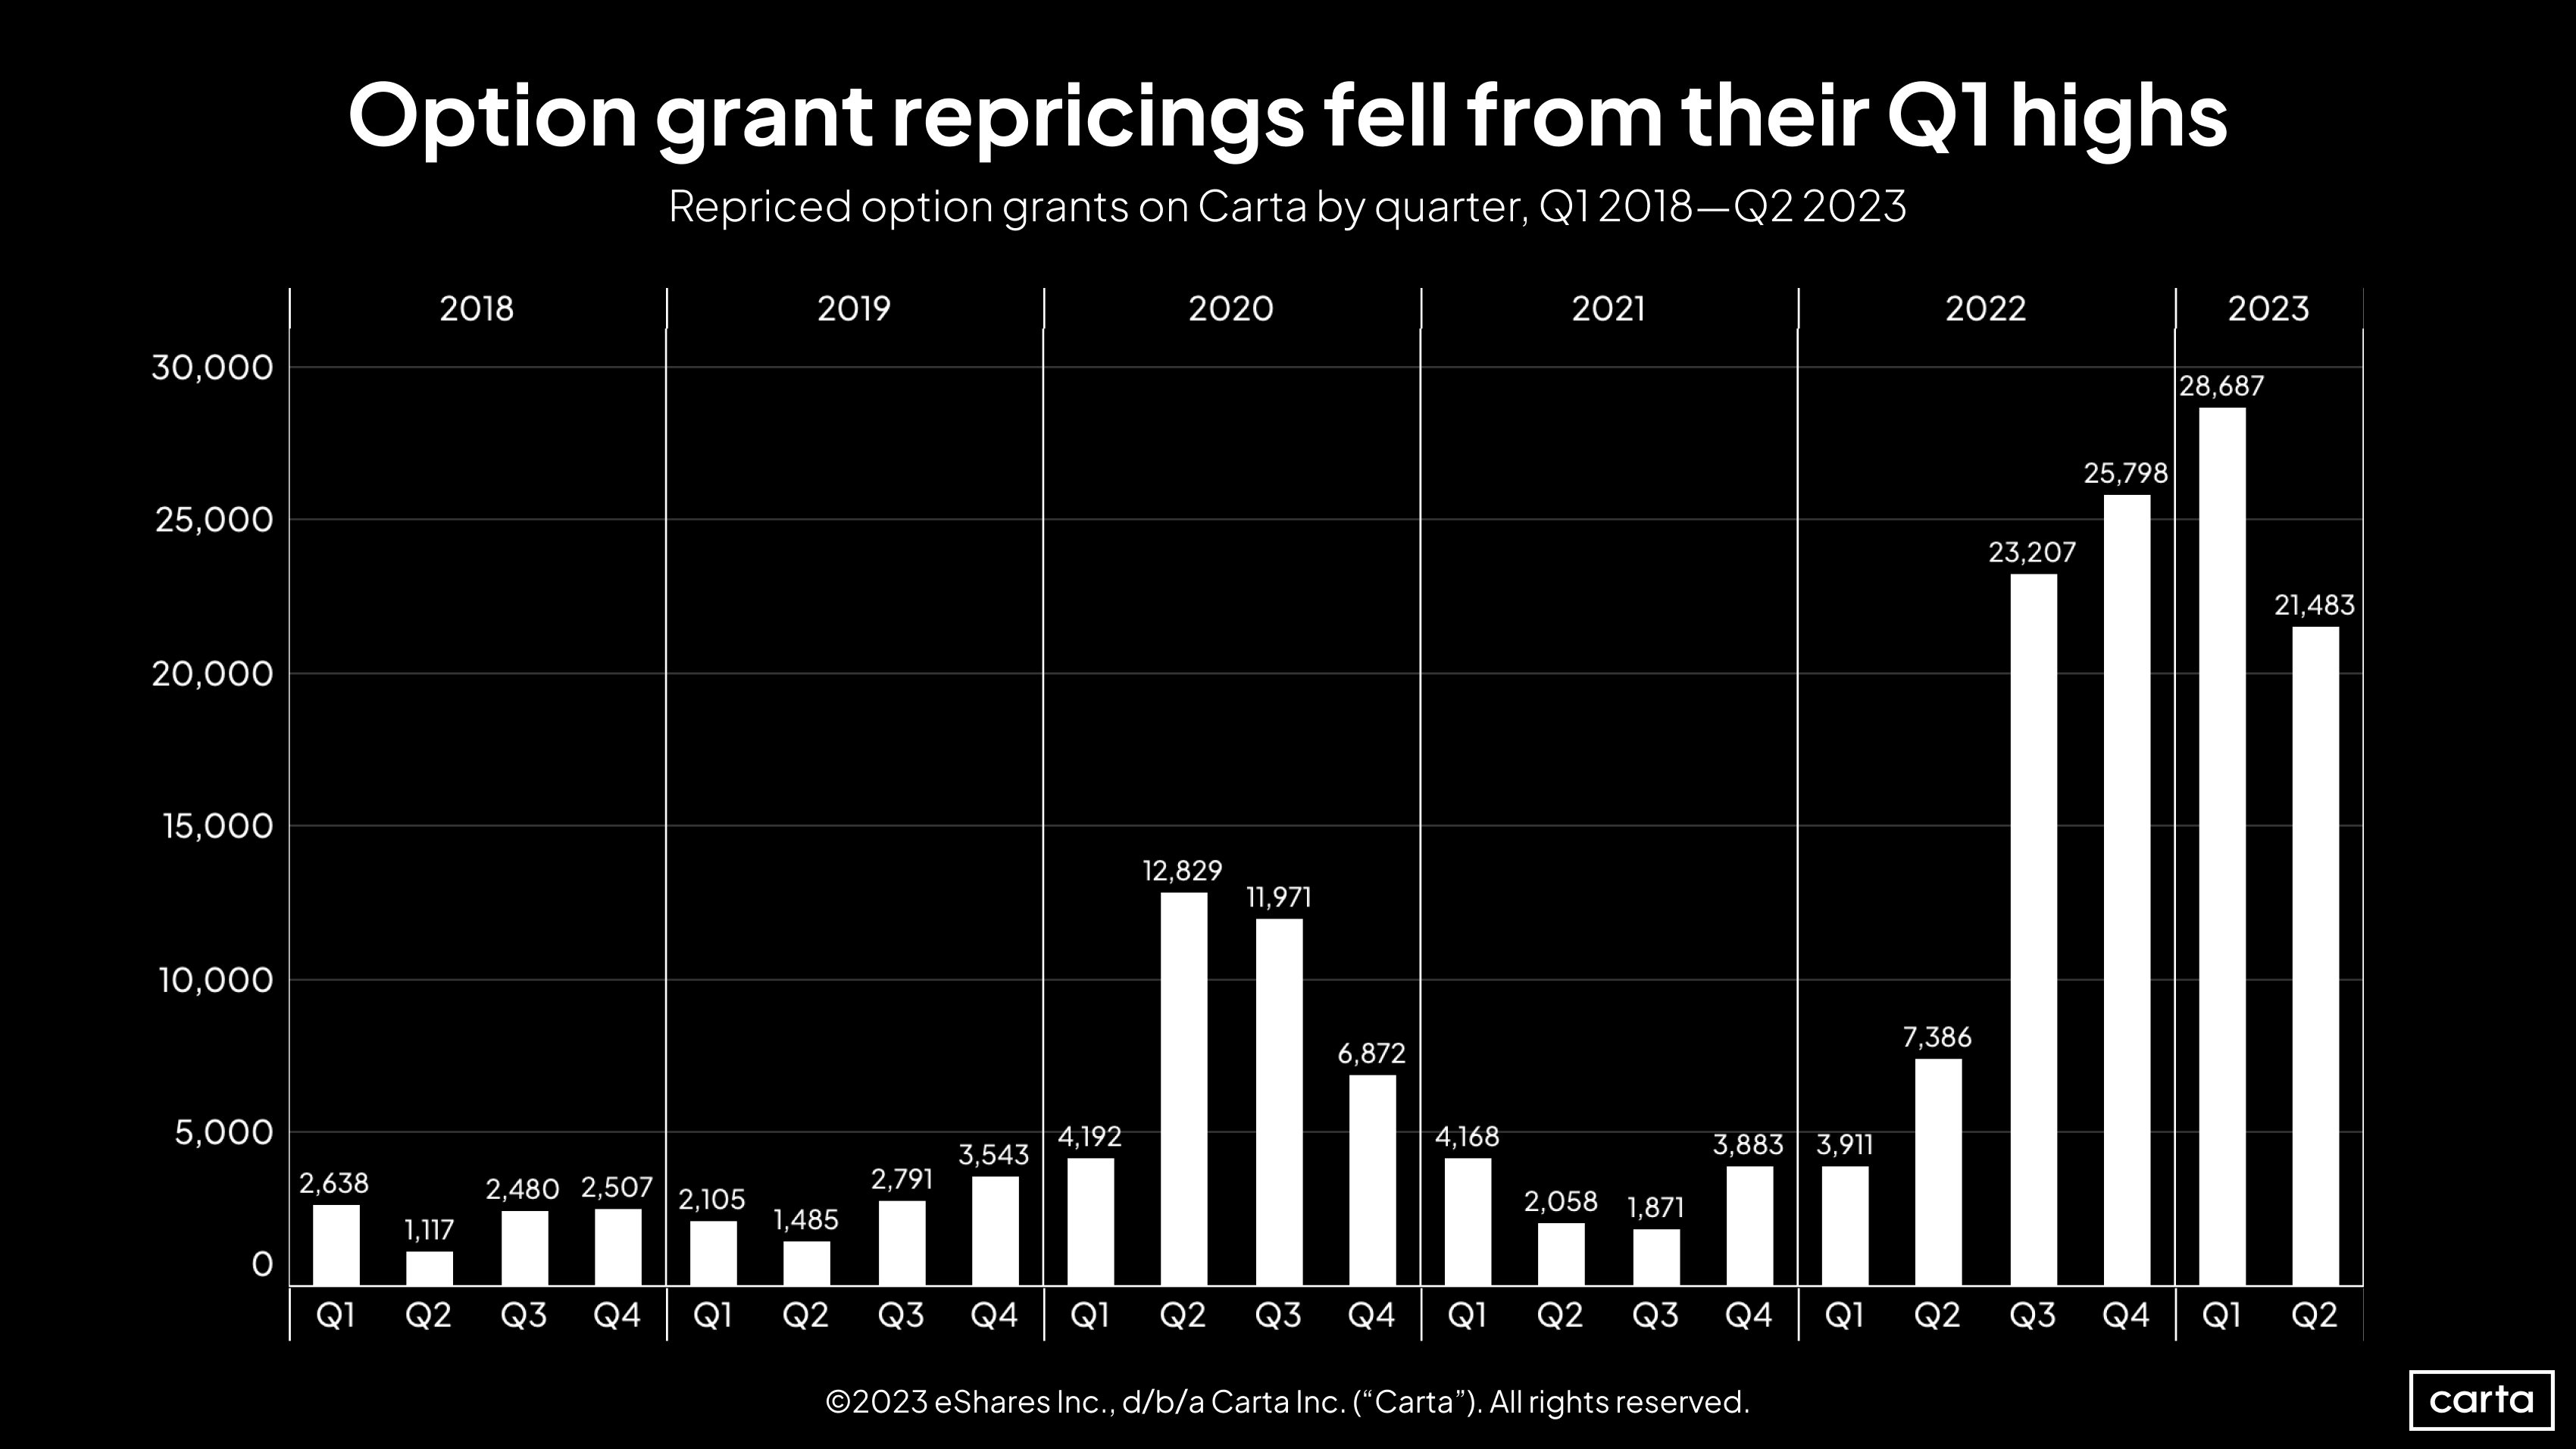 Repriced option grants on Carta by quarter, Q1 2018 - Q2 2023